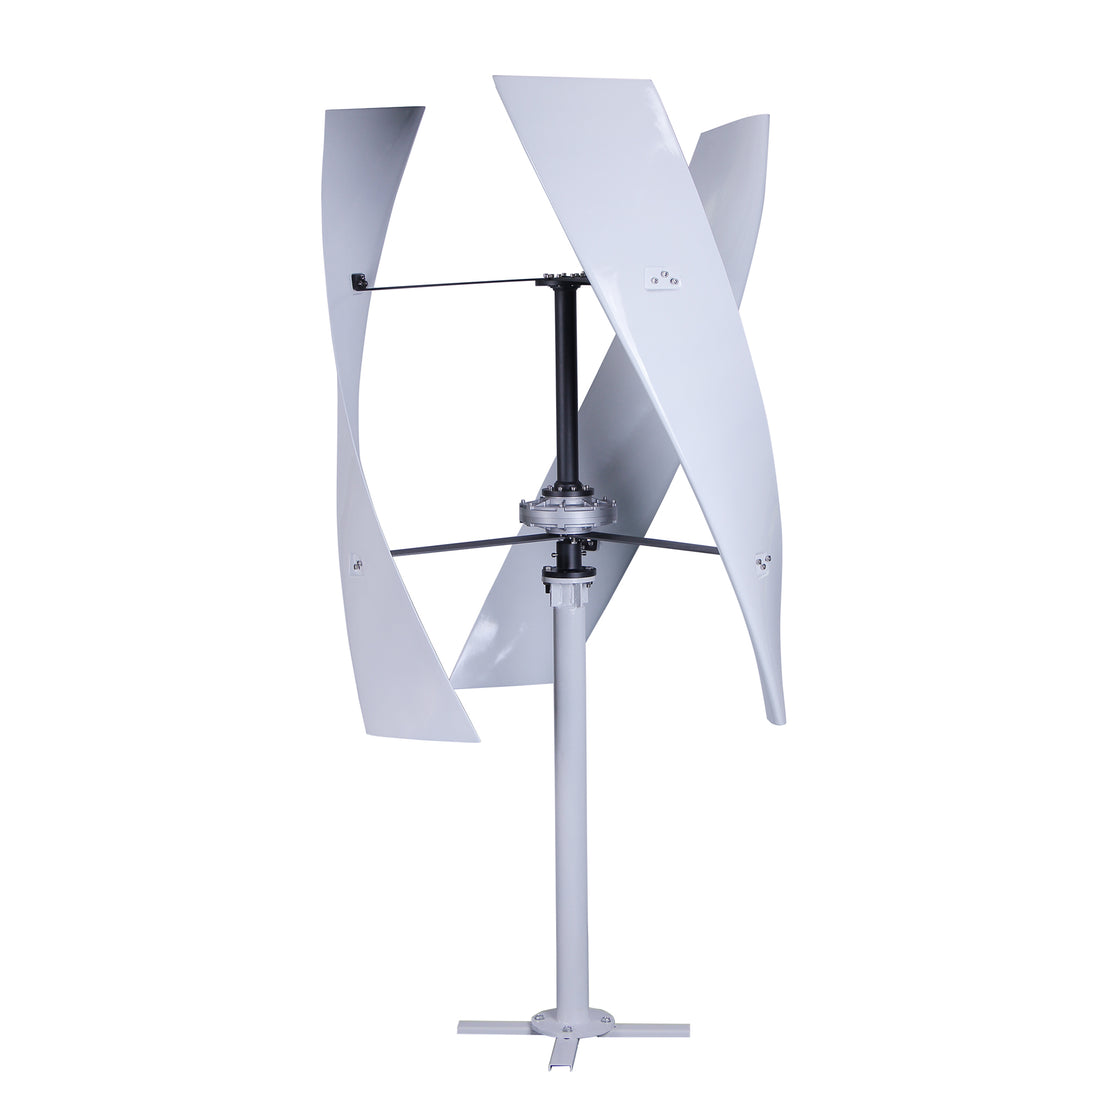 600W Wind Turbines Type X Vertical Axis